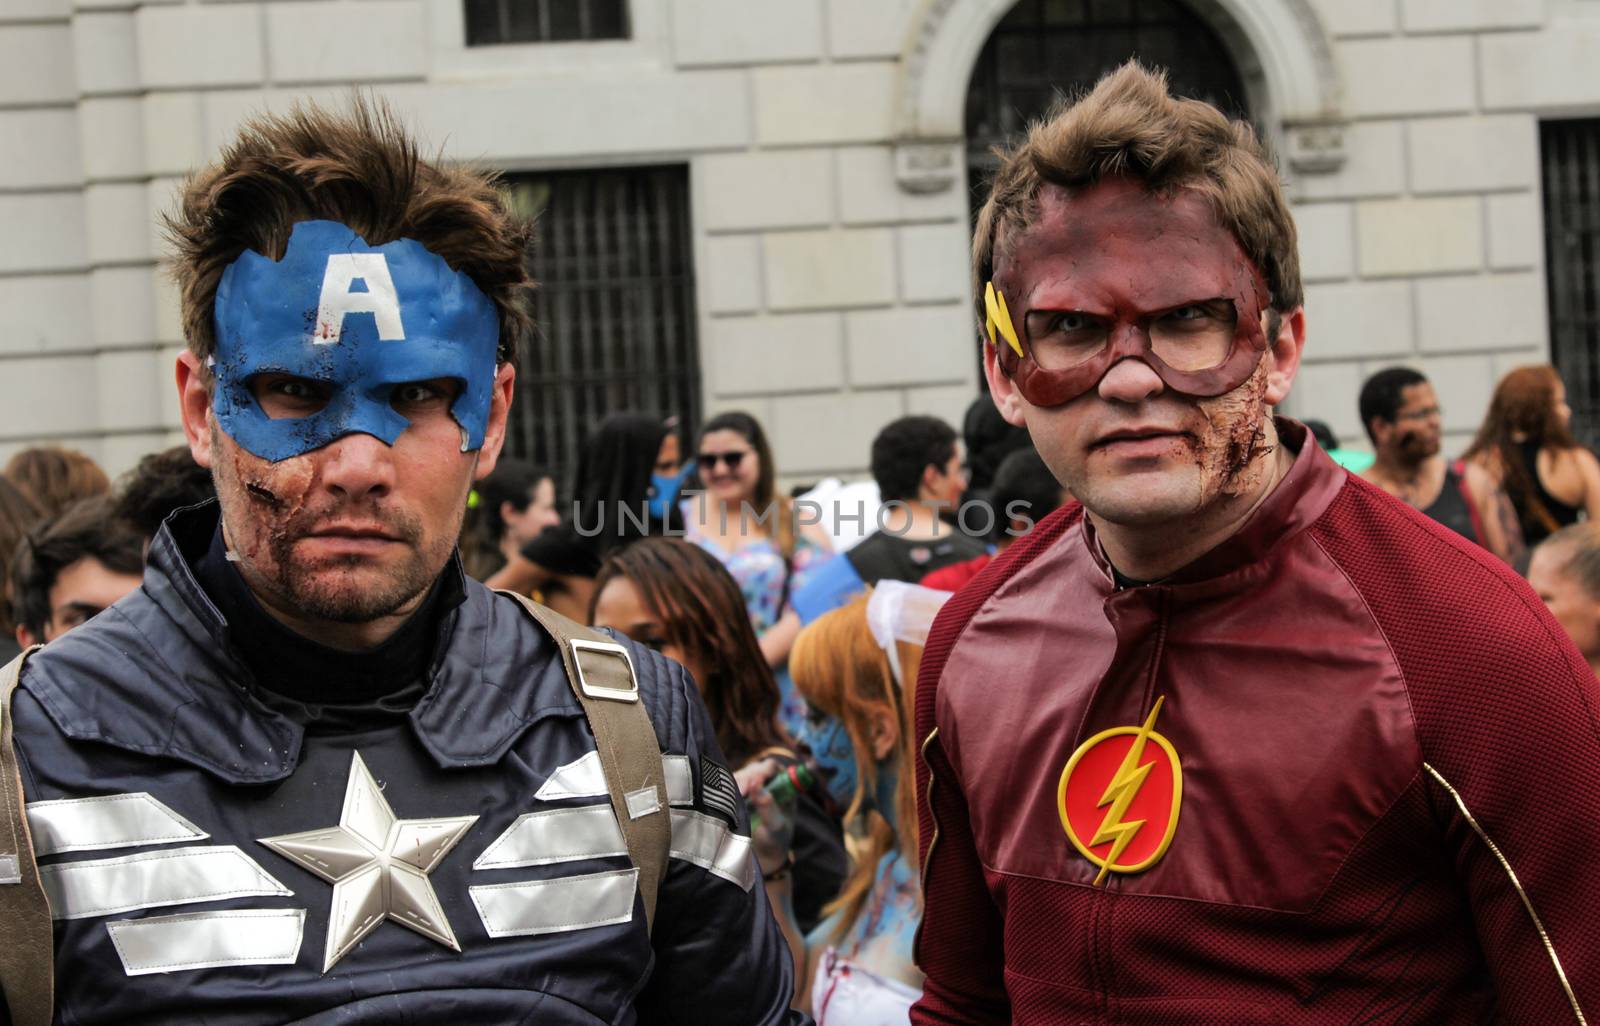 Sao Paulo, Brazil November 11 2015: Two unidentified men in super heroes costumes in the annual event Zombie Walk in Sao Paulo Brazil.